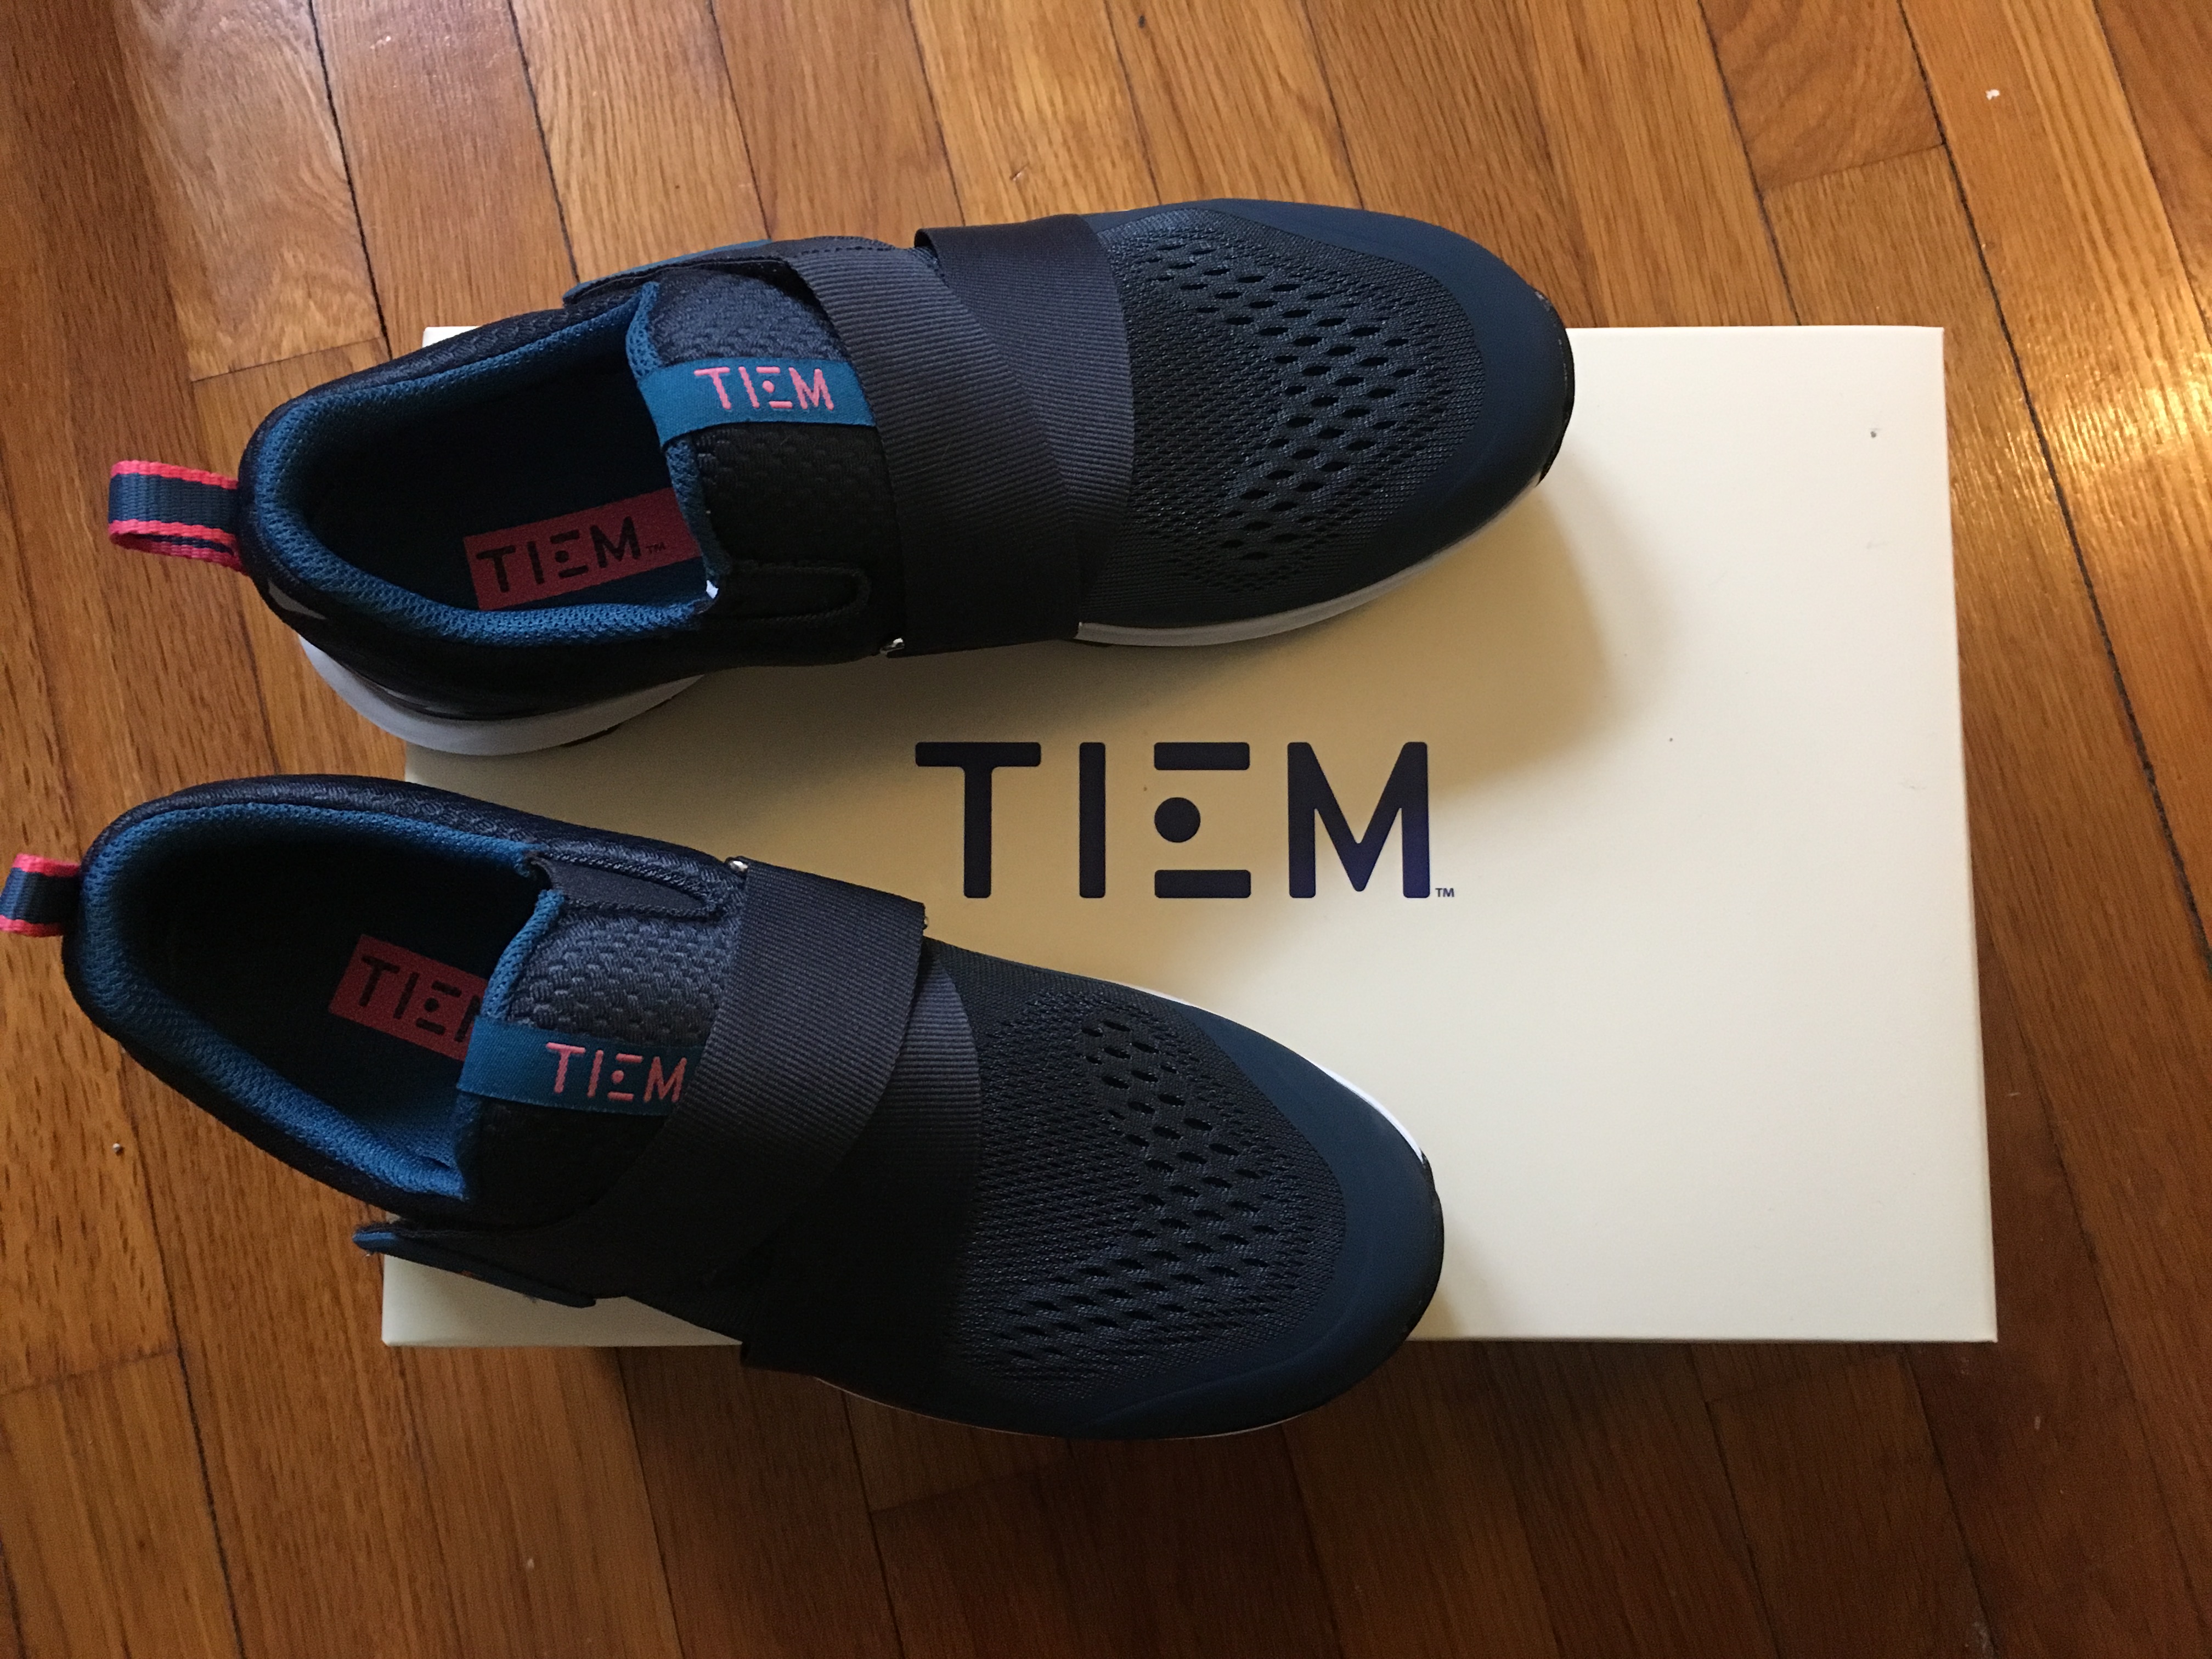 used tiem shoes